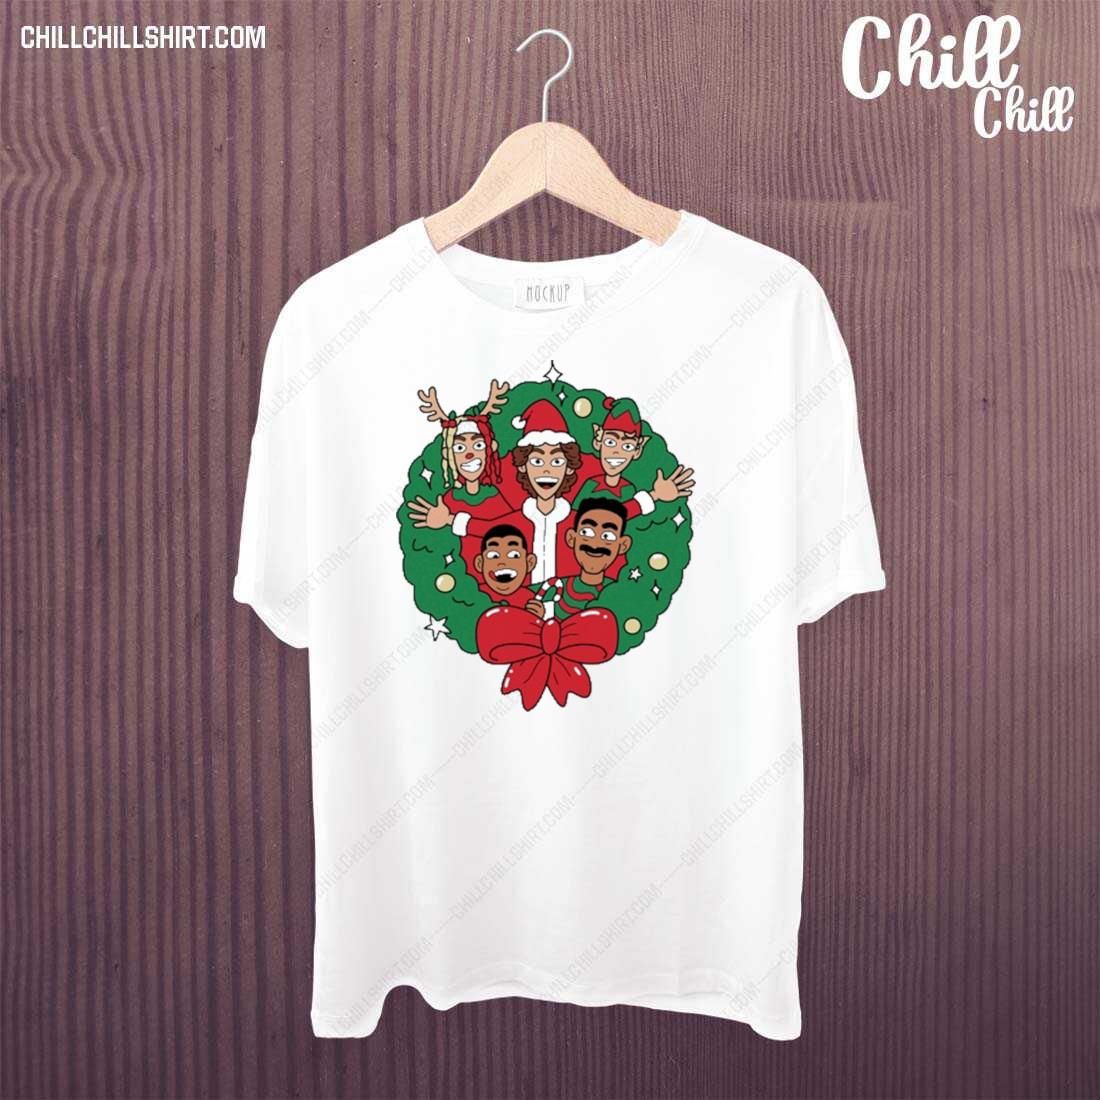 Nice wreath Christmas T-shirt